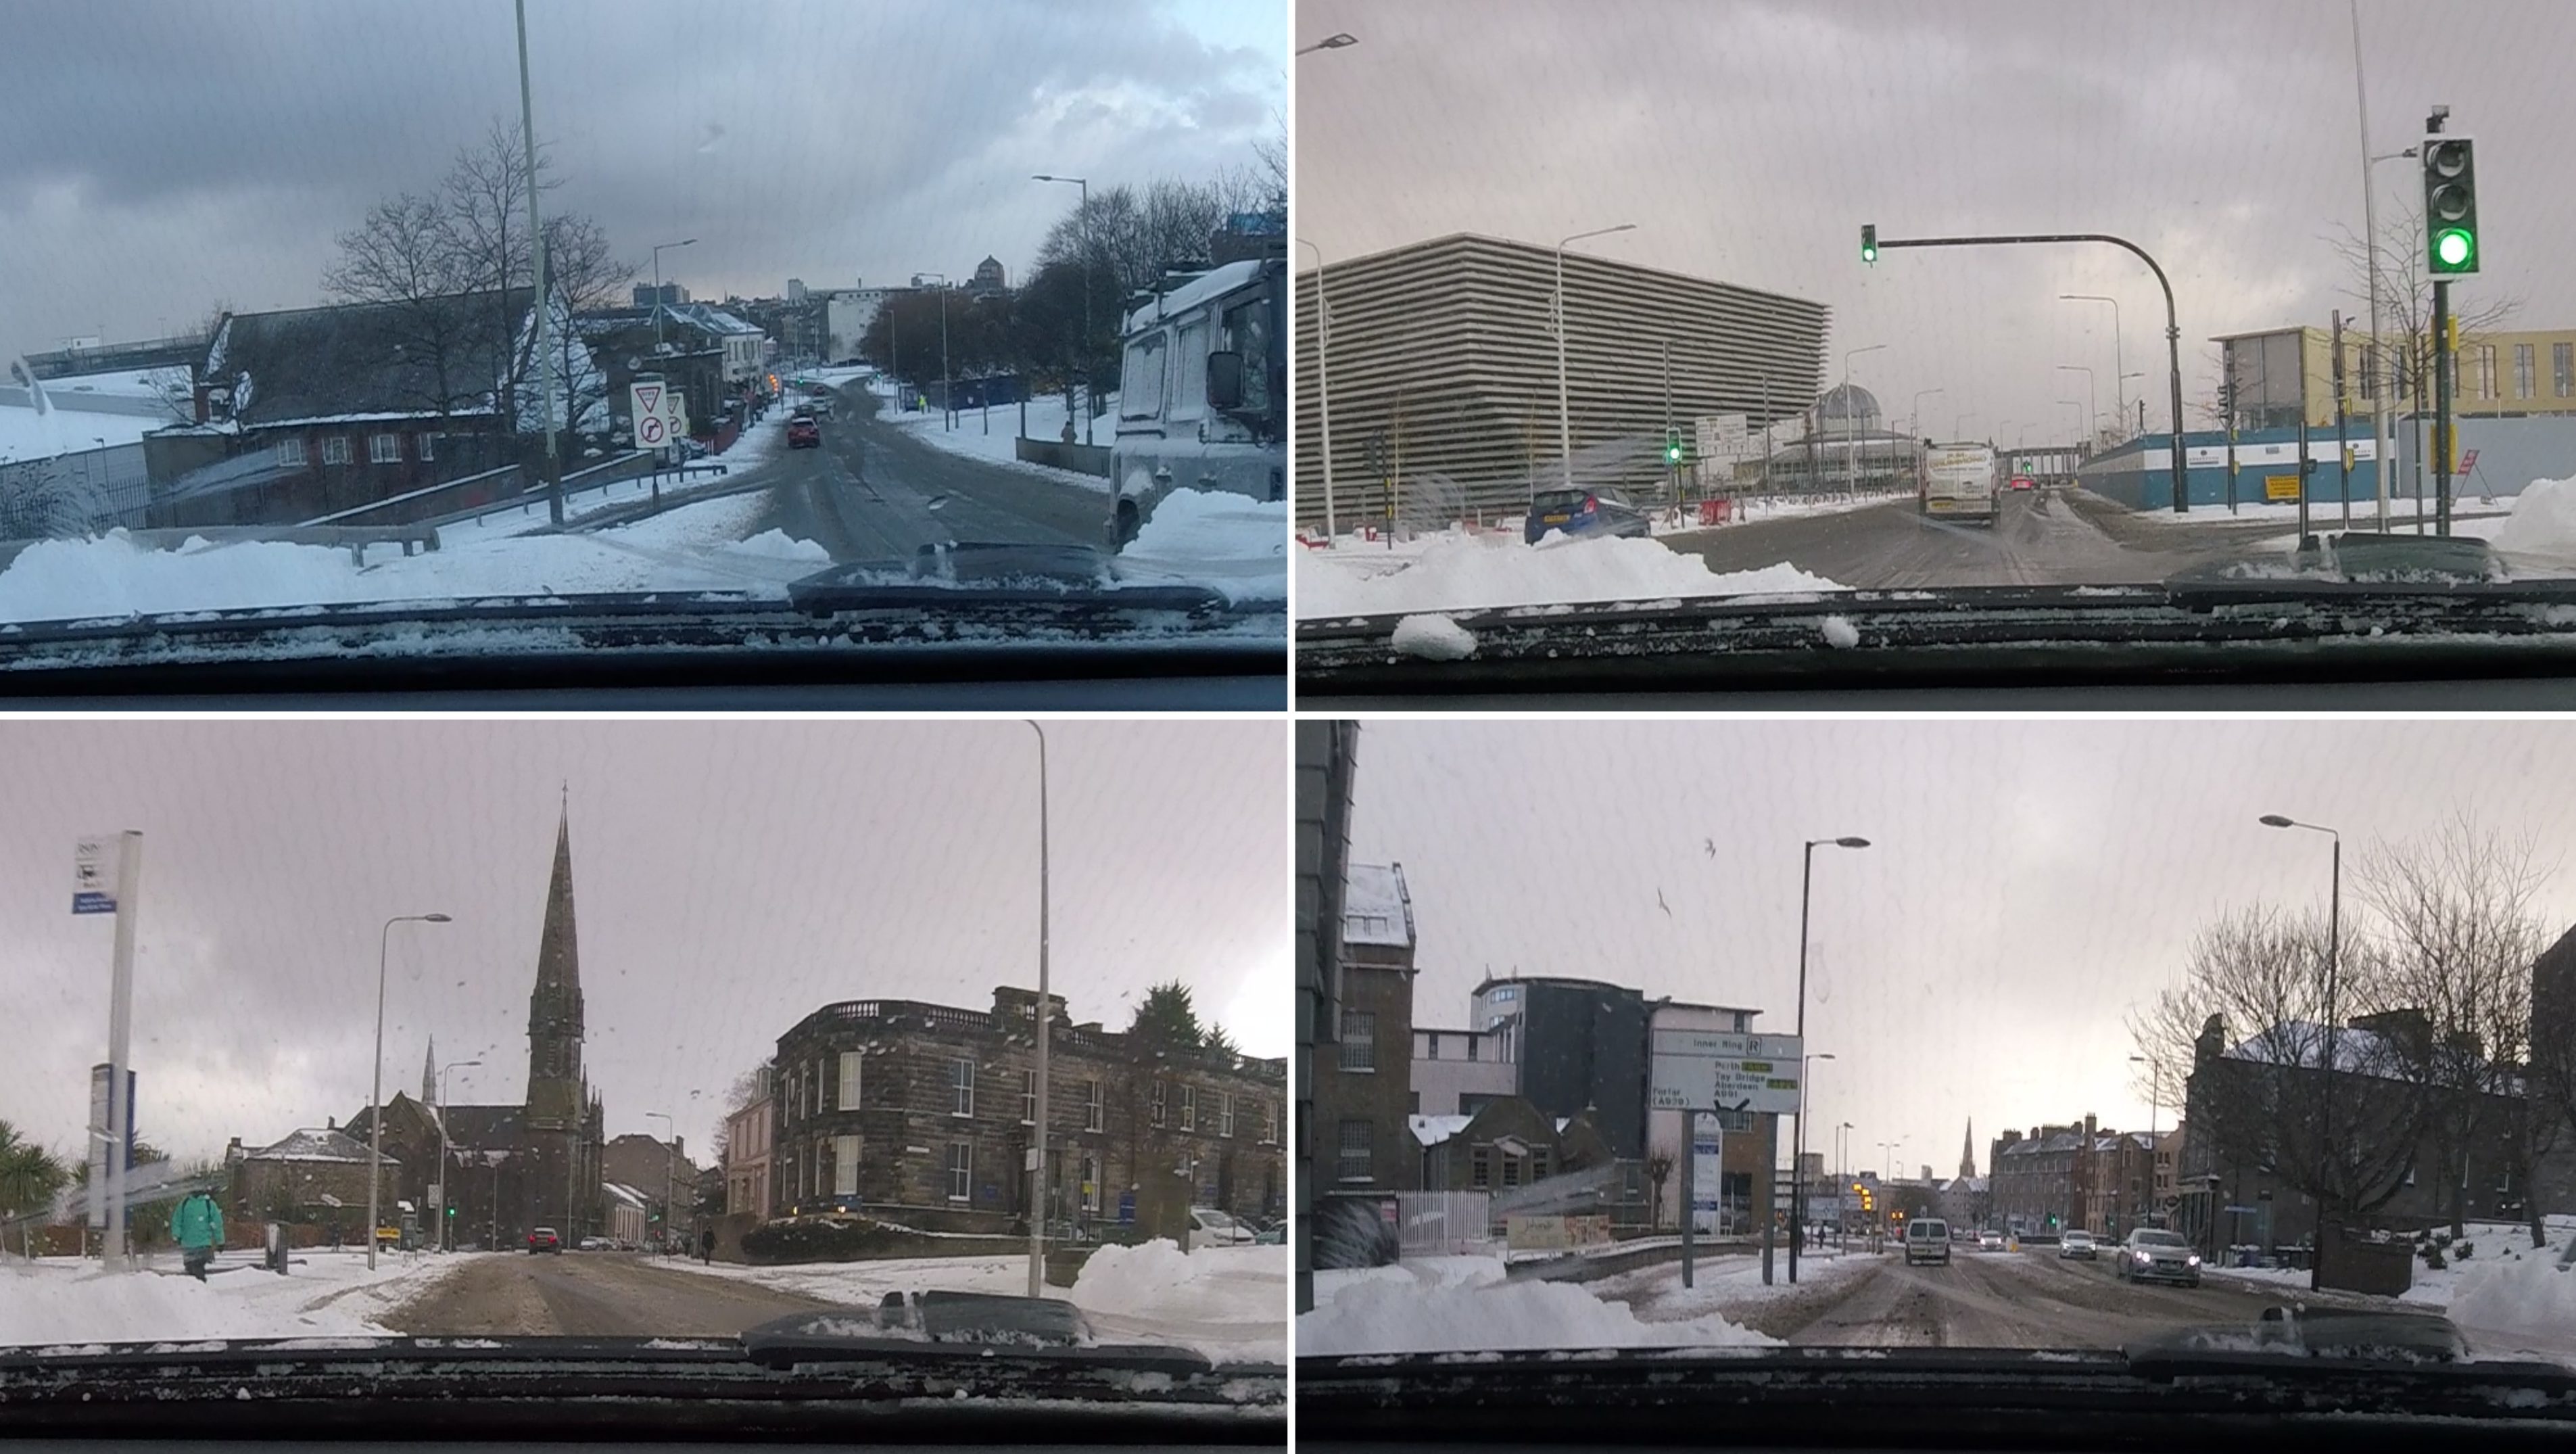 Dundee's empty roads on Thursday morning